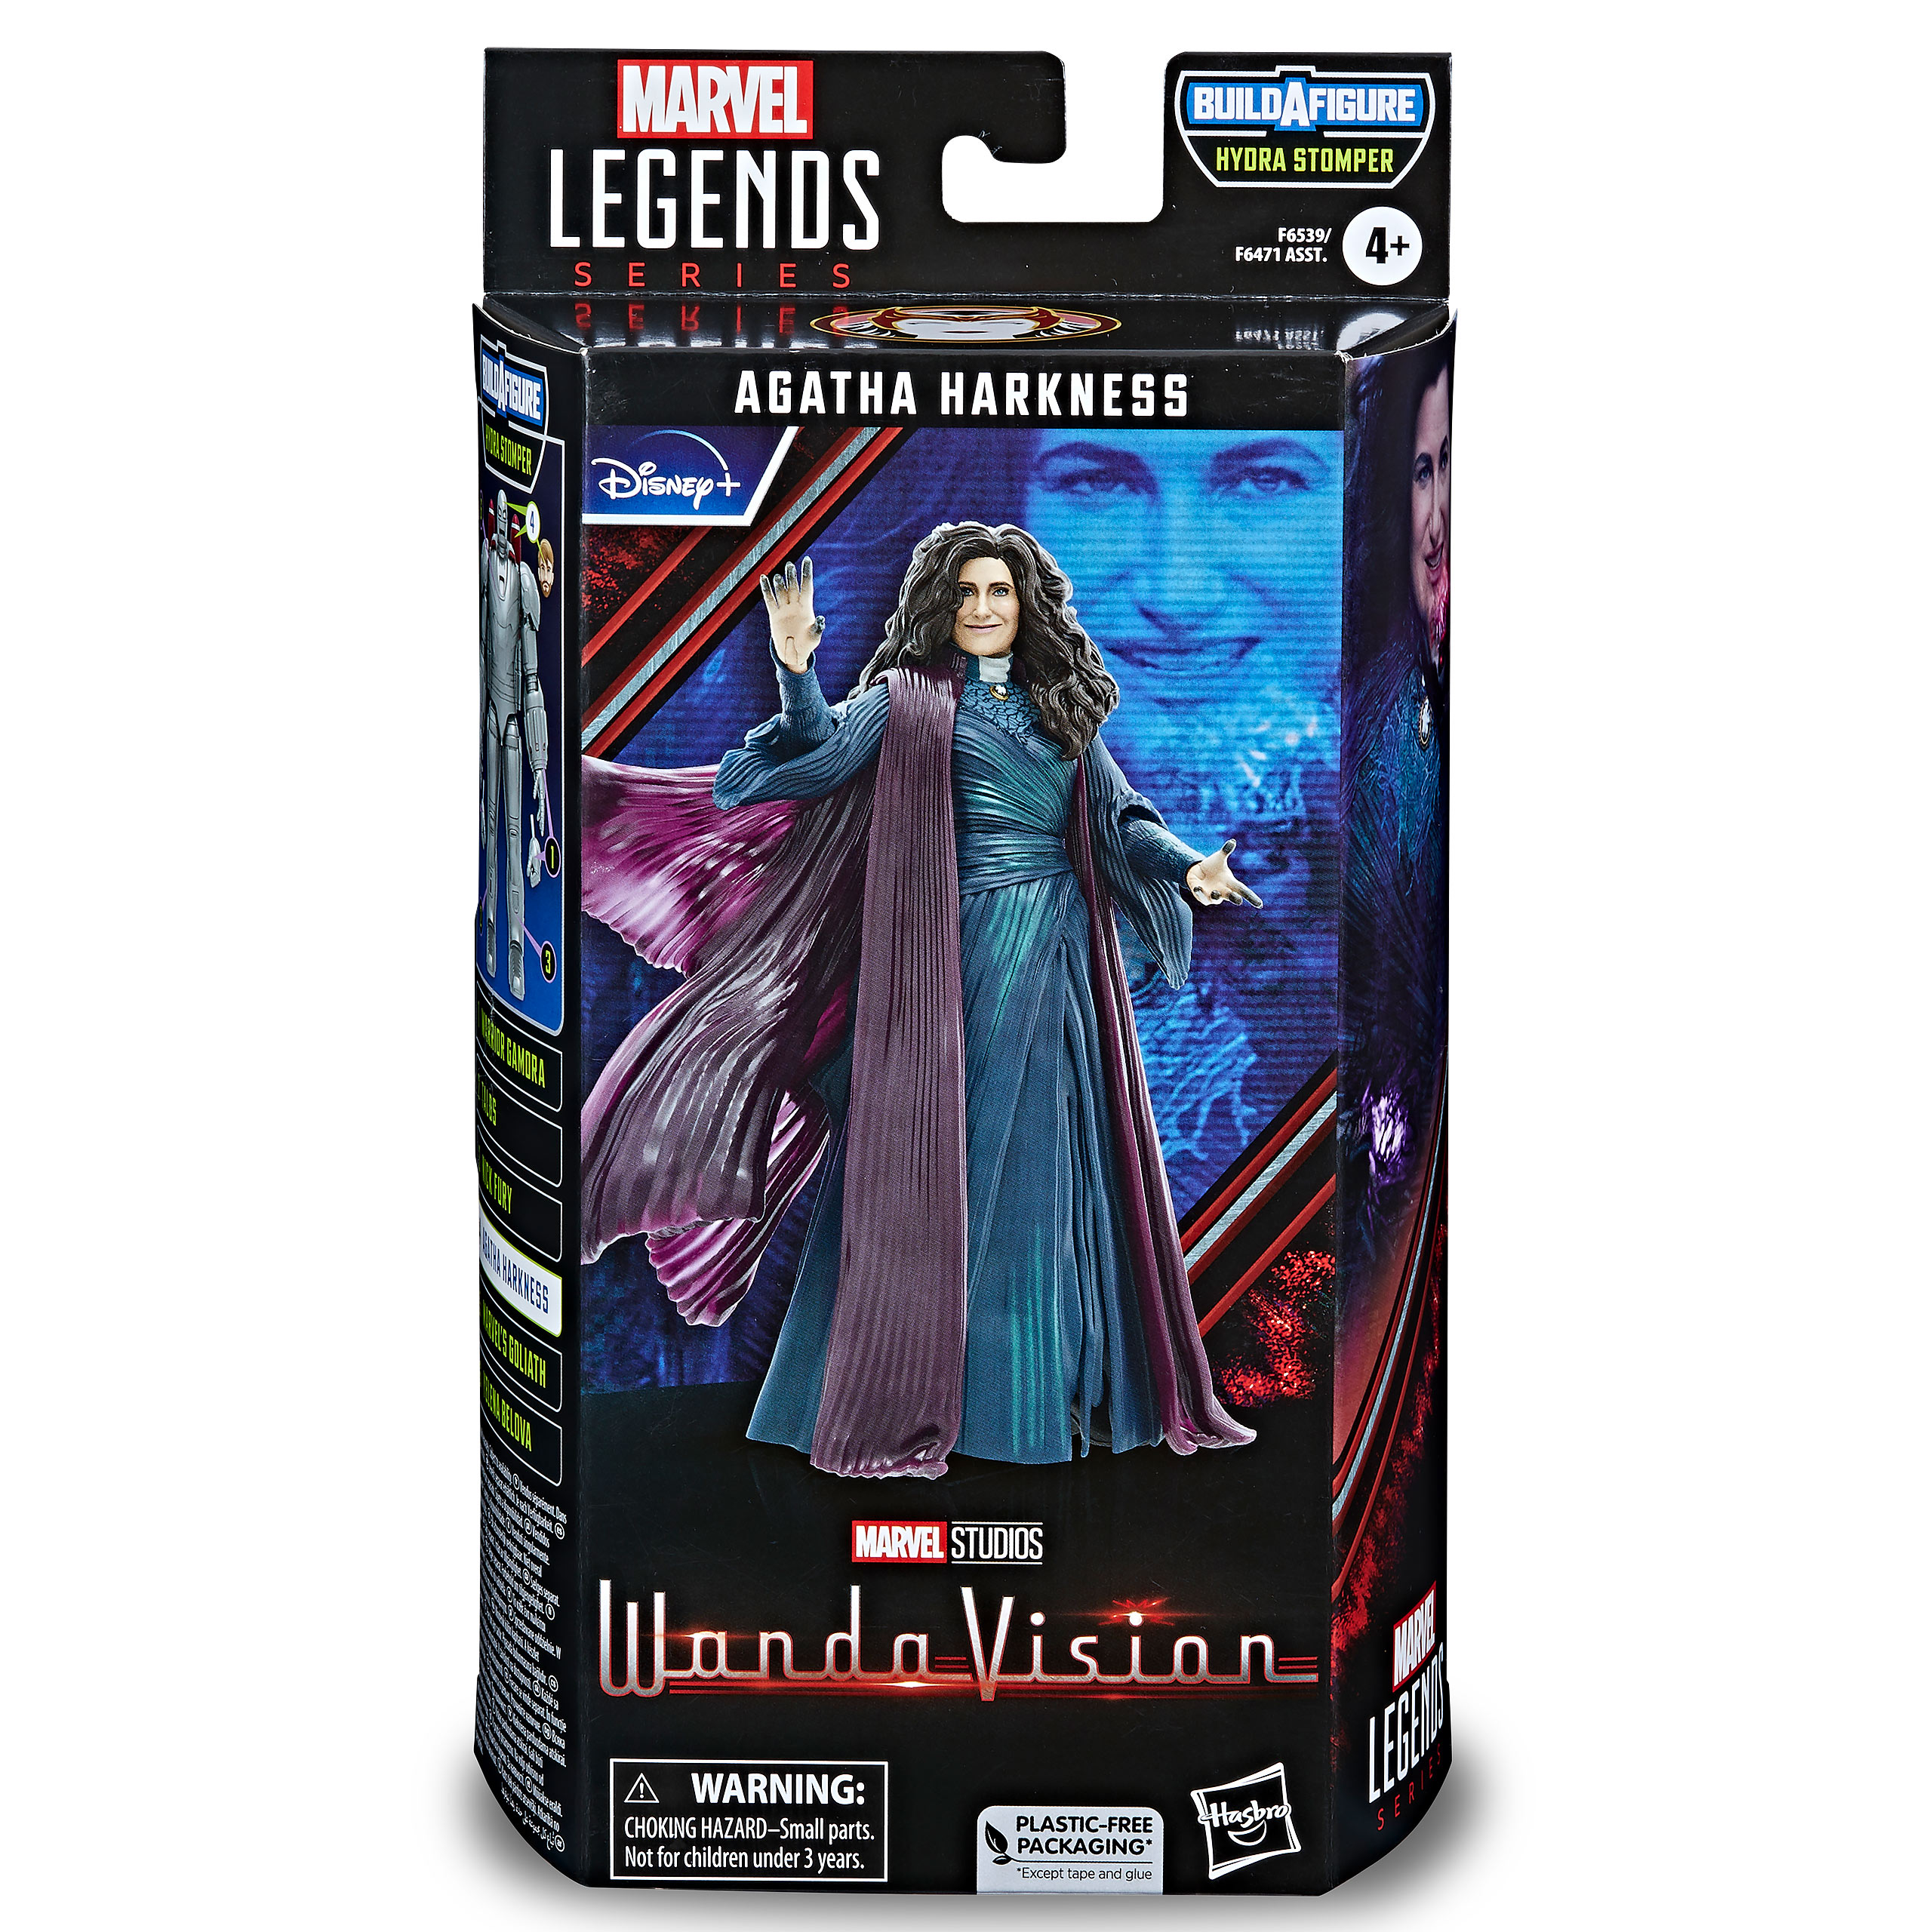 Wanda Vision - Agatha Harkness Marvel Legends Series Action Figure